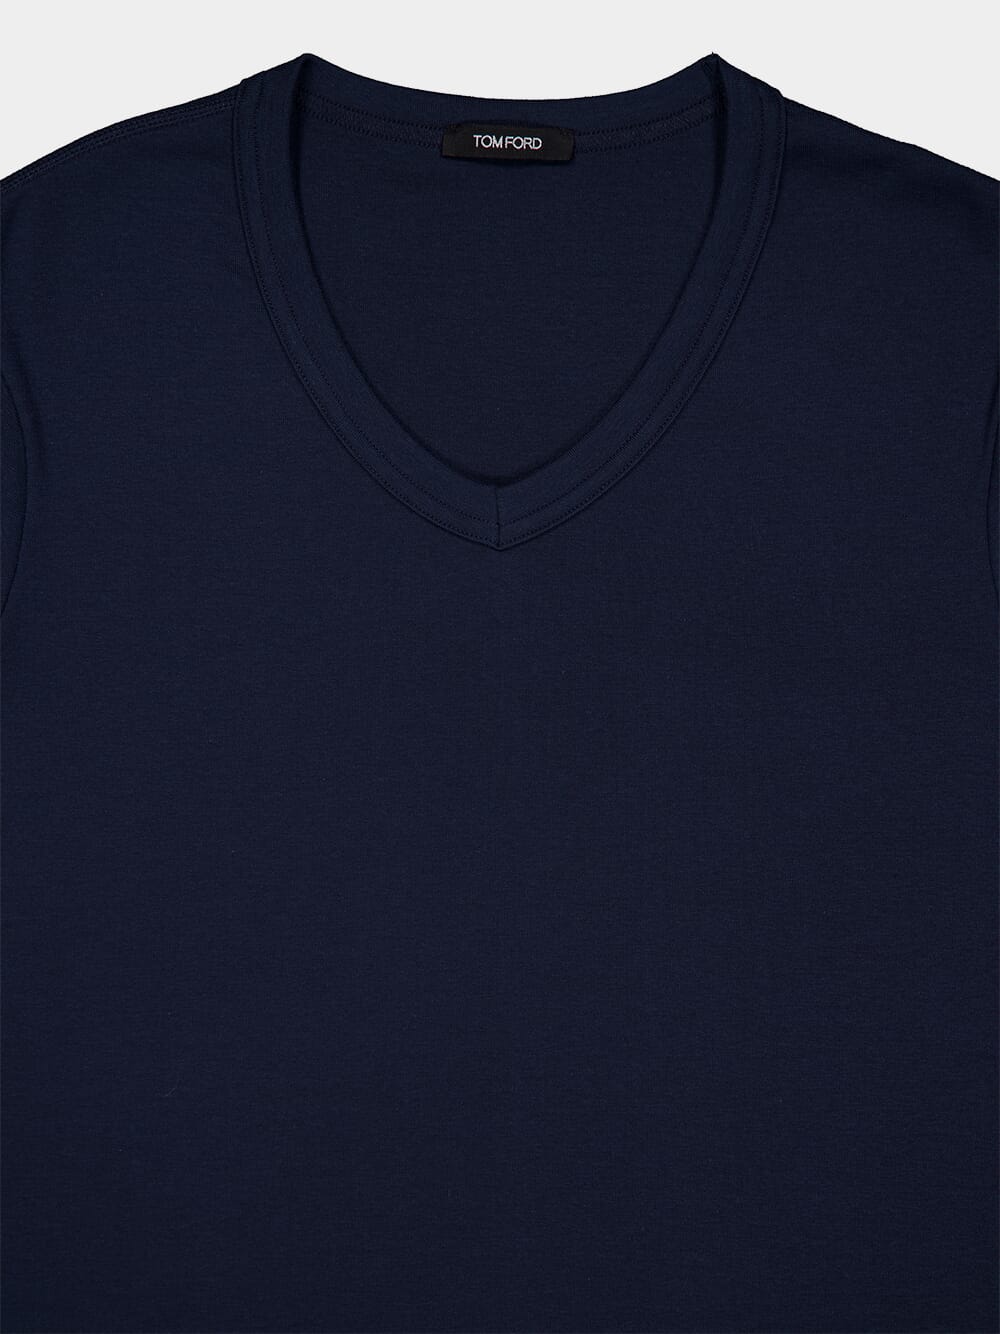 Tom FordClassic V-Neck Navy T-Shirt at Fashion Clinic